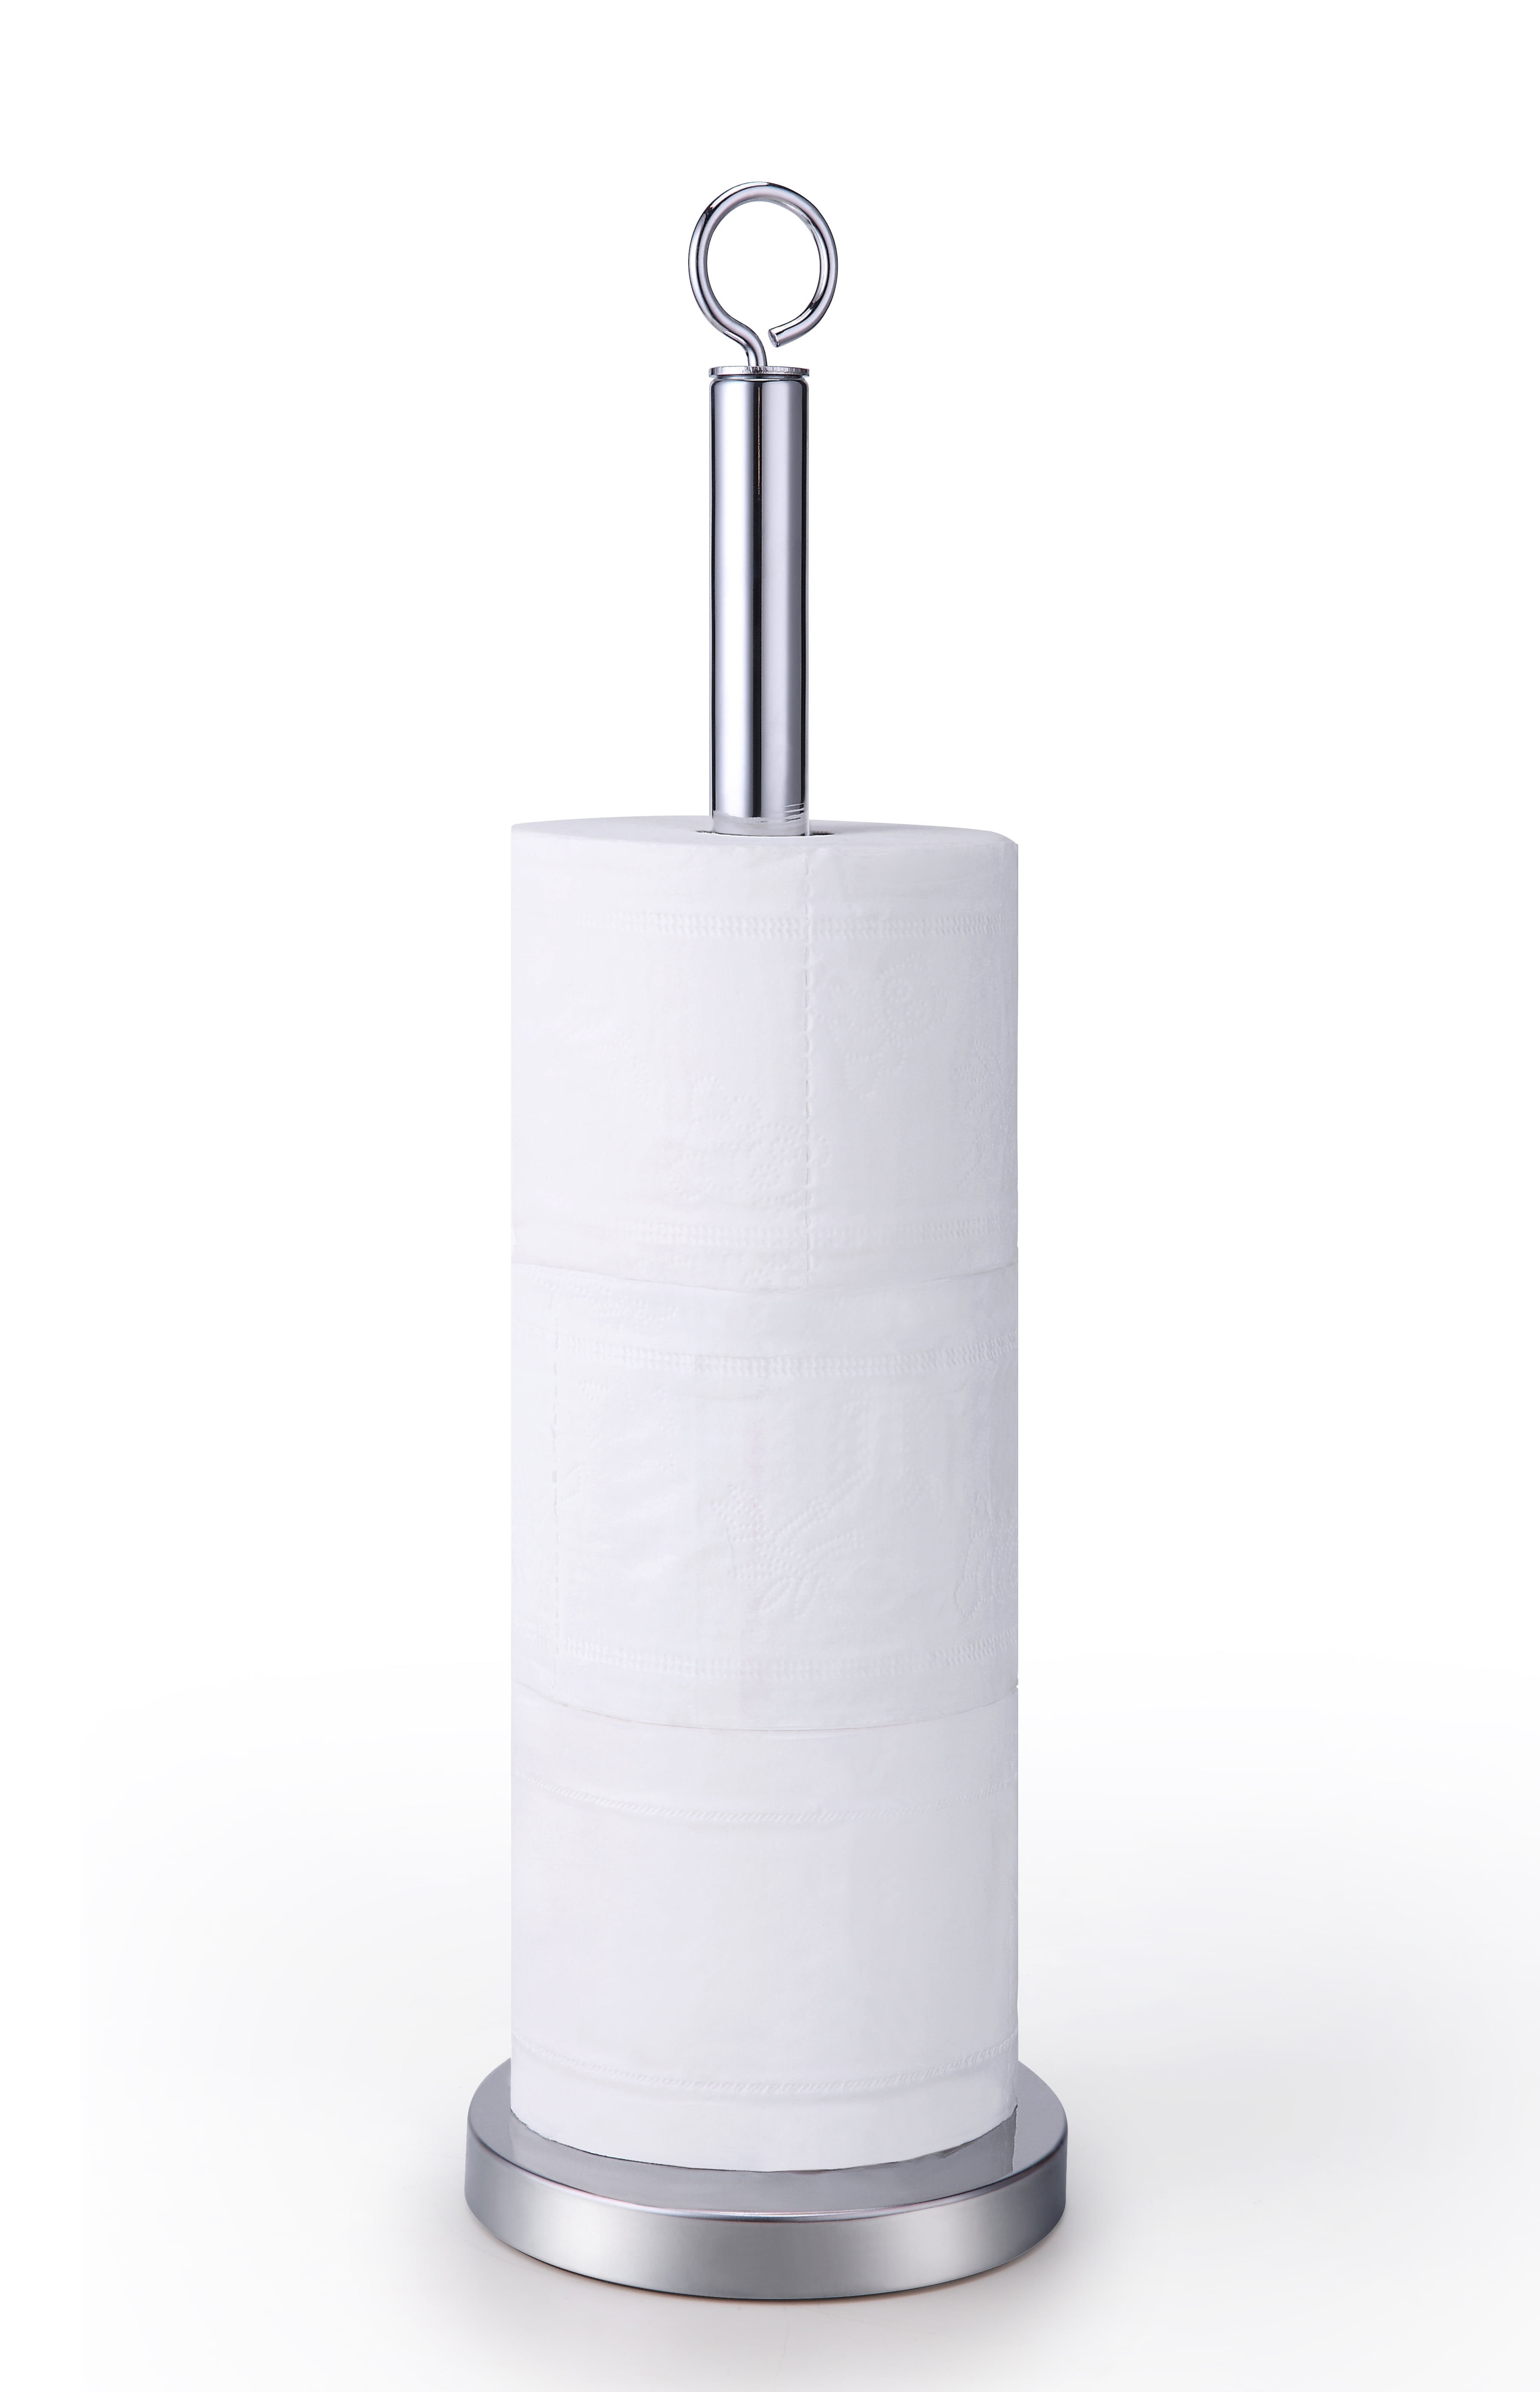 InterDesign Forma Free Standing Toilet Paper Holder Dispenser and Spare Roll Storage for Bathroom Bronze 27262 